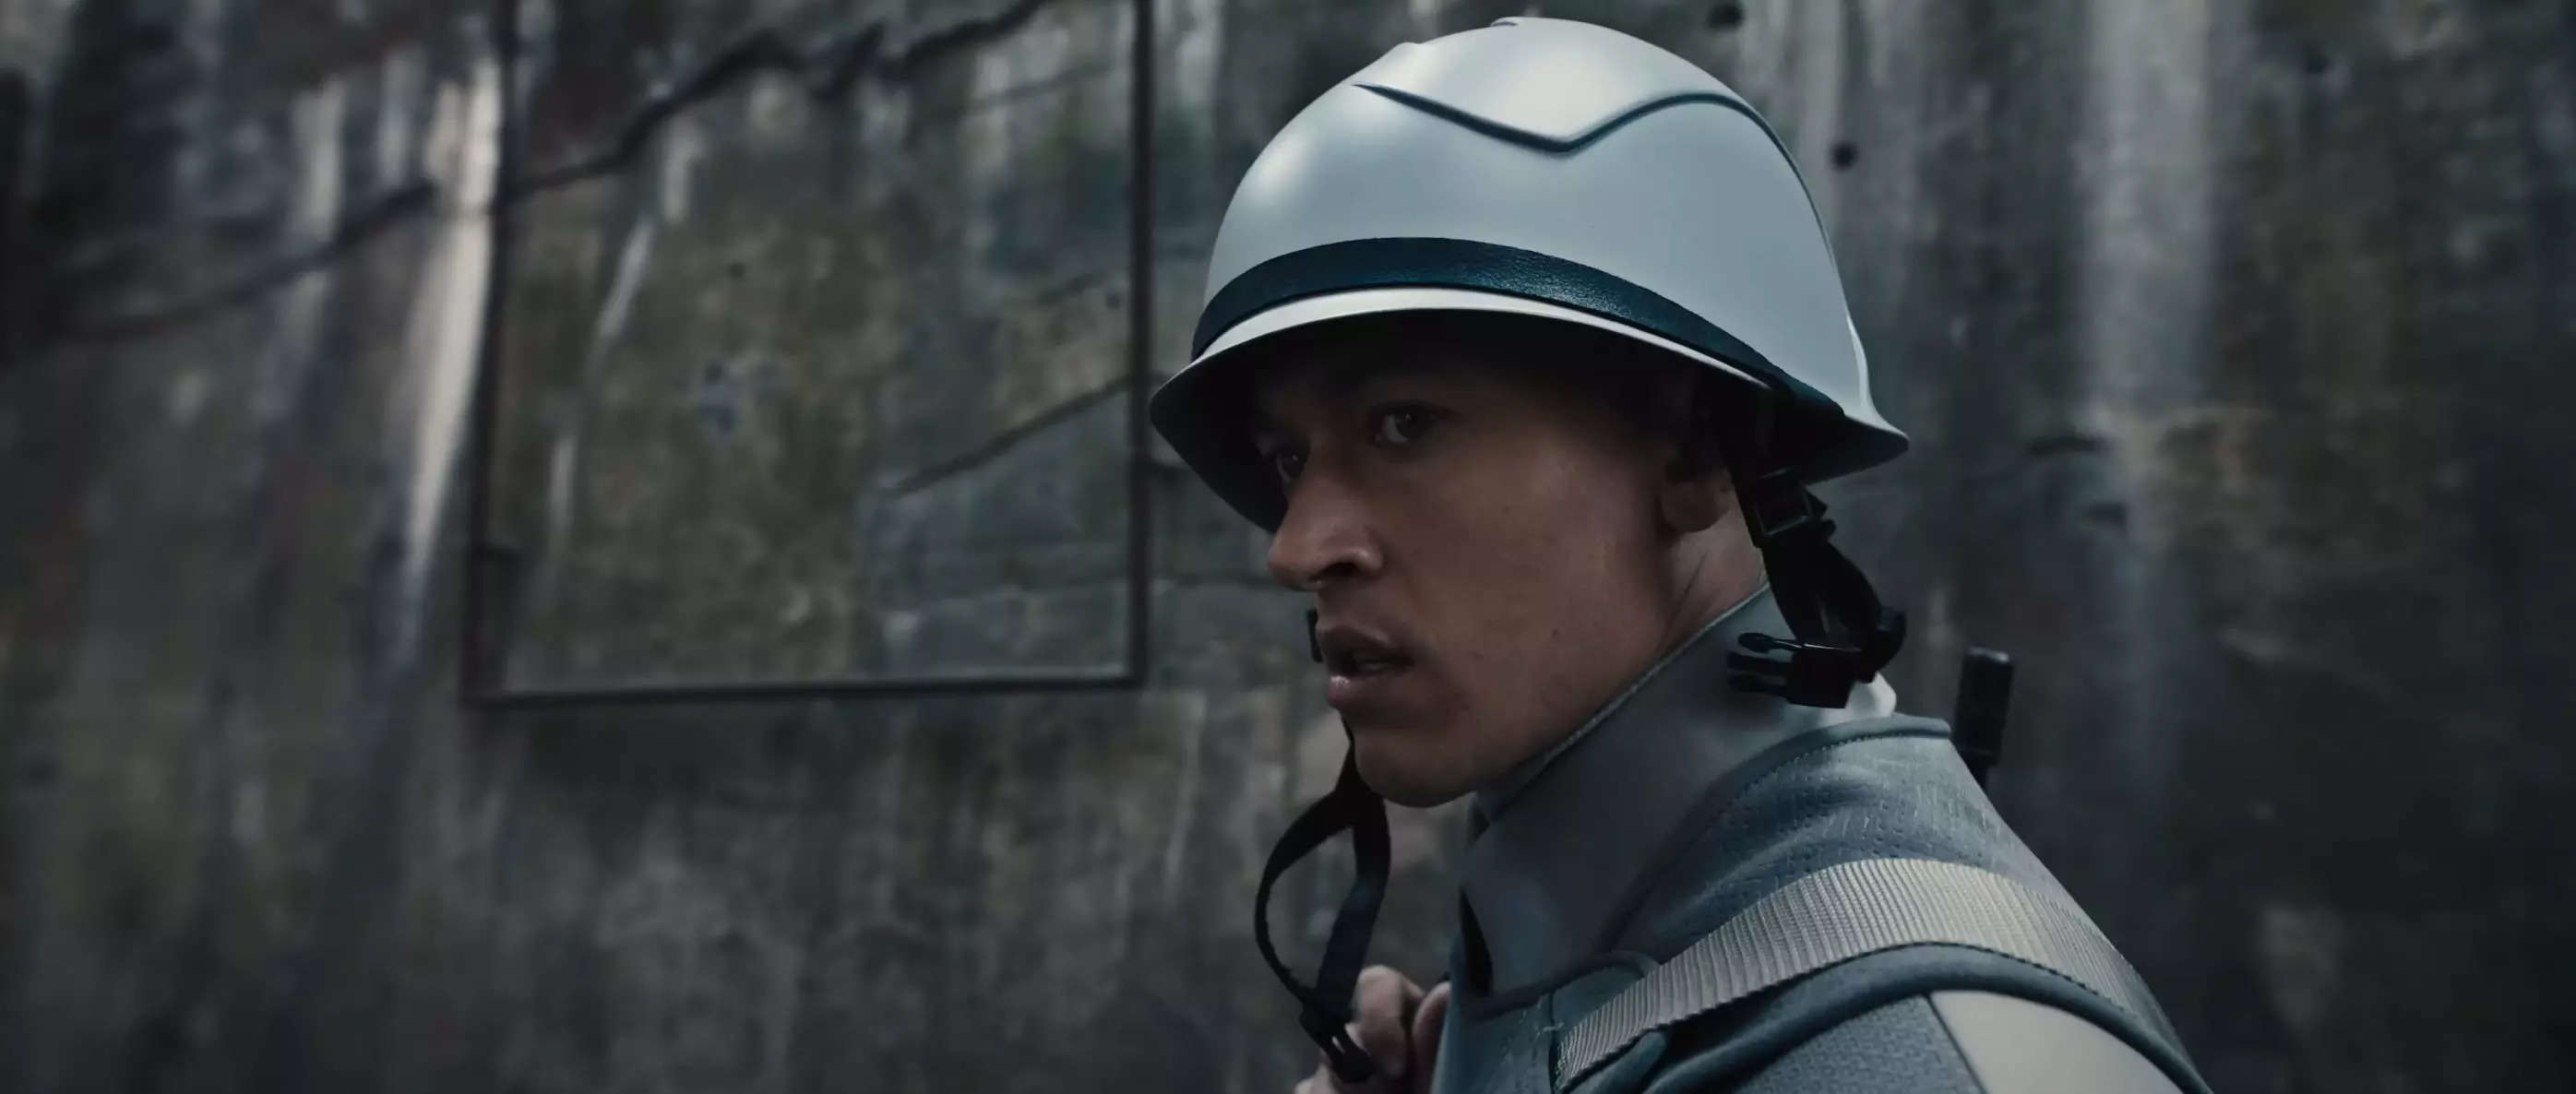 Tom Blyth as Coriolanus Snow in "The Hunger Games" prequel movie.